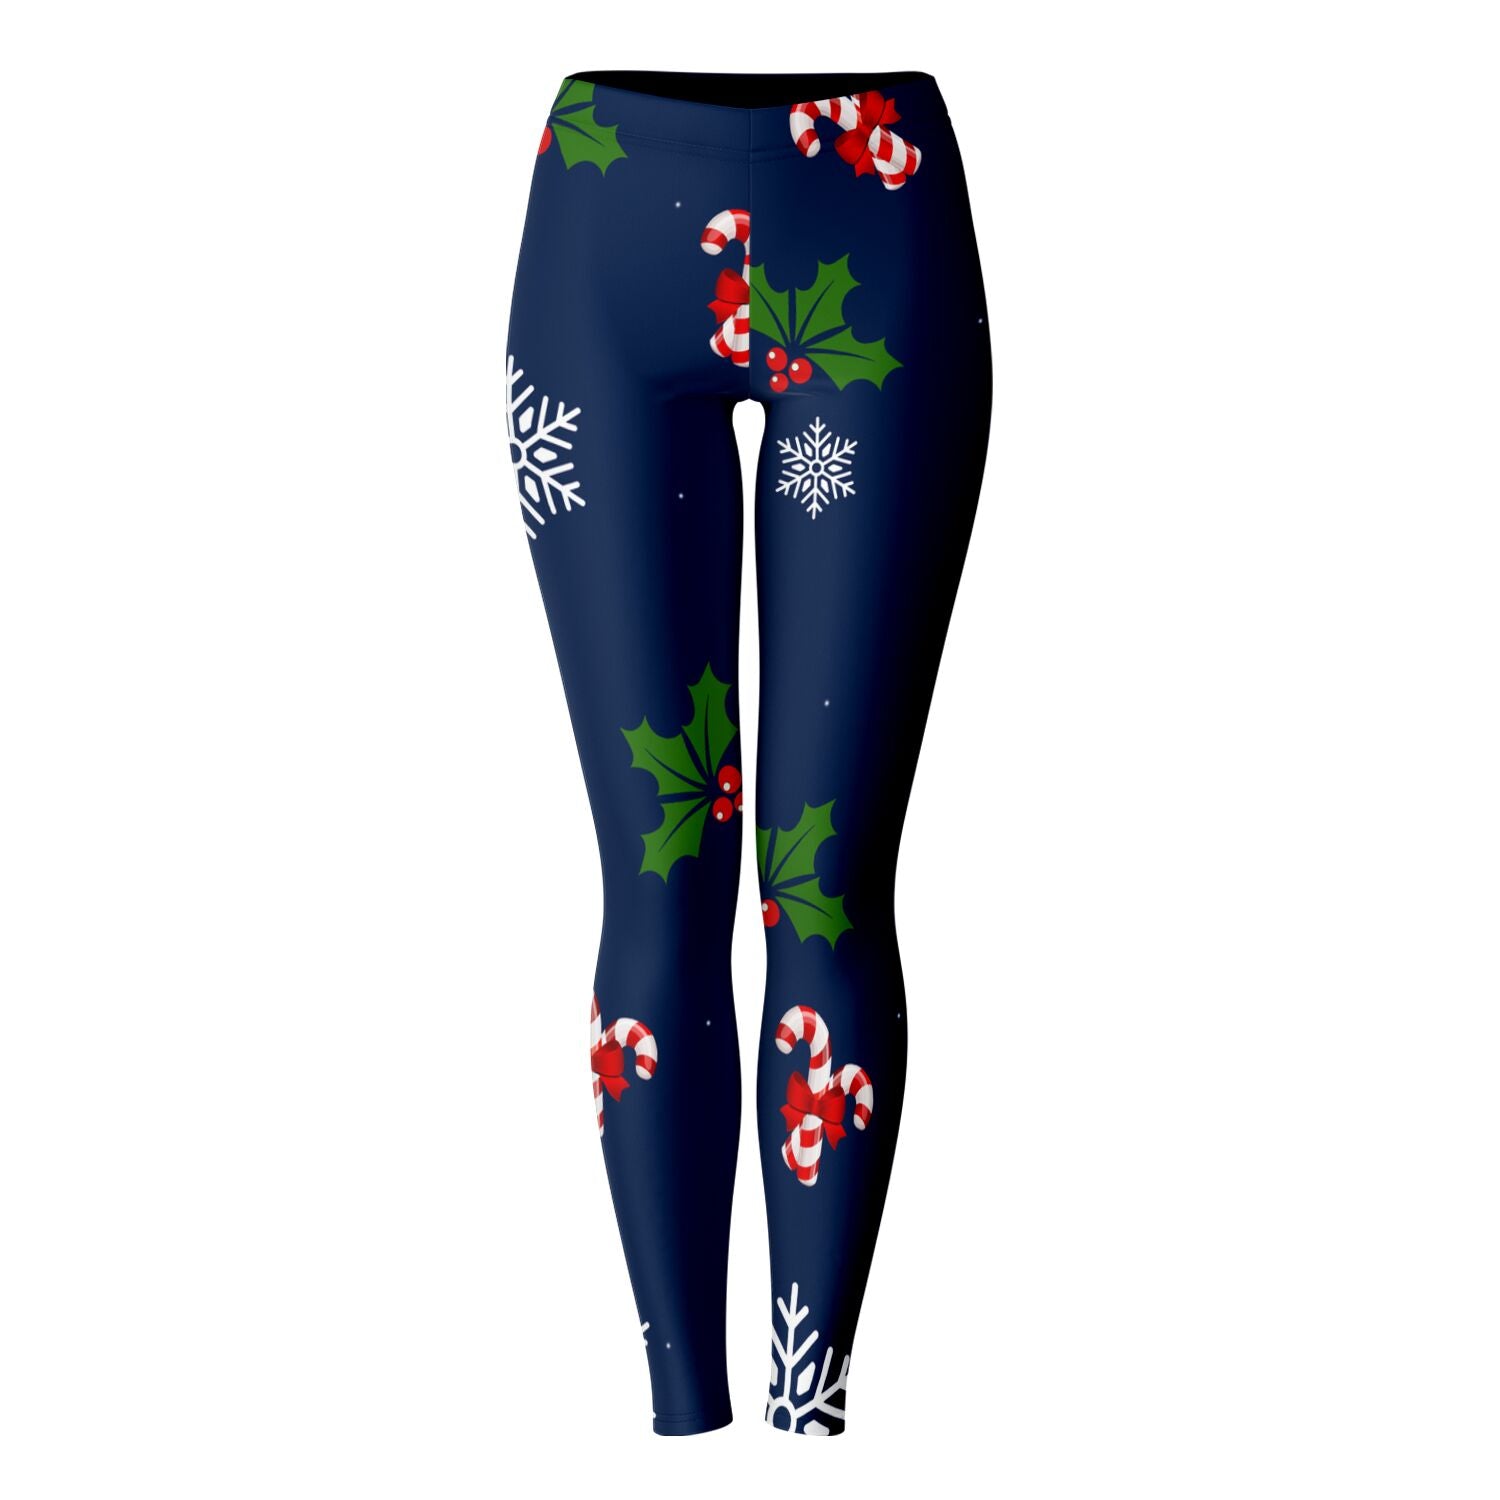 Tis The Season - Christmas Leggings